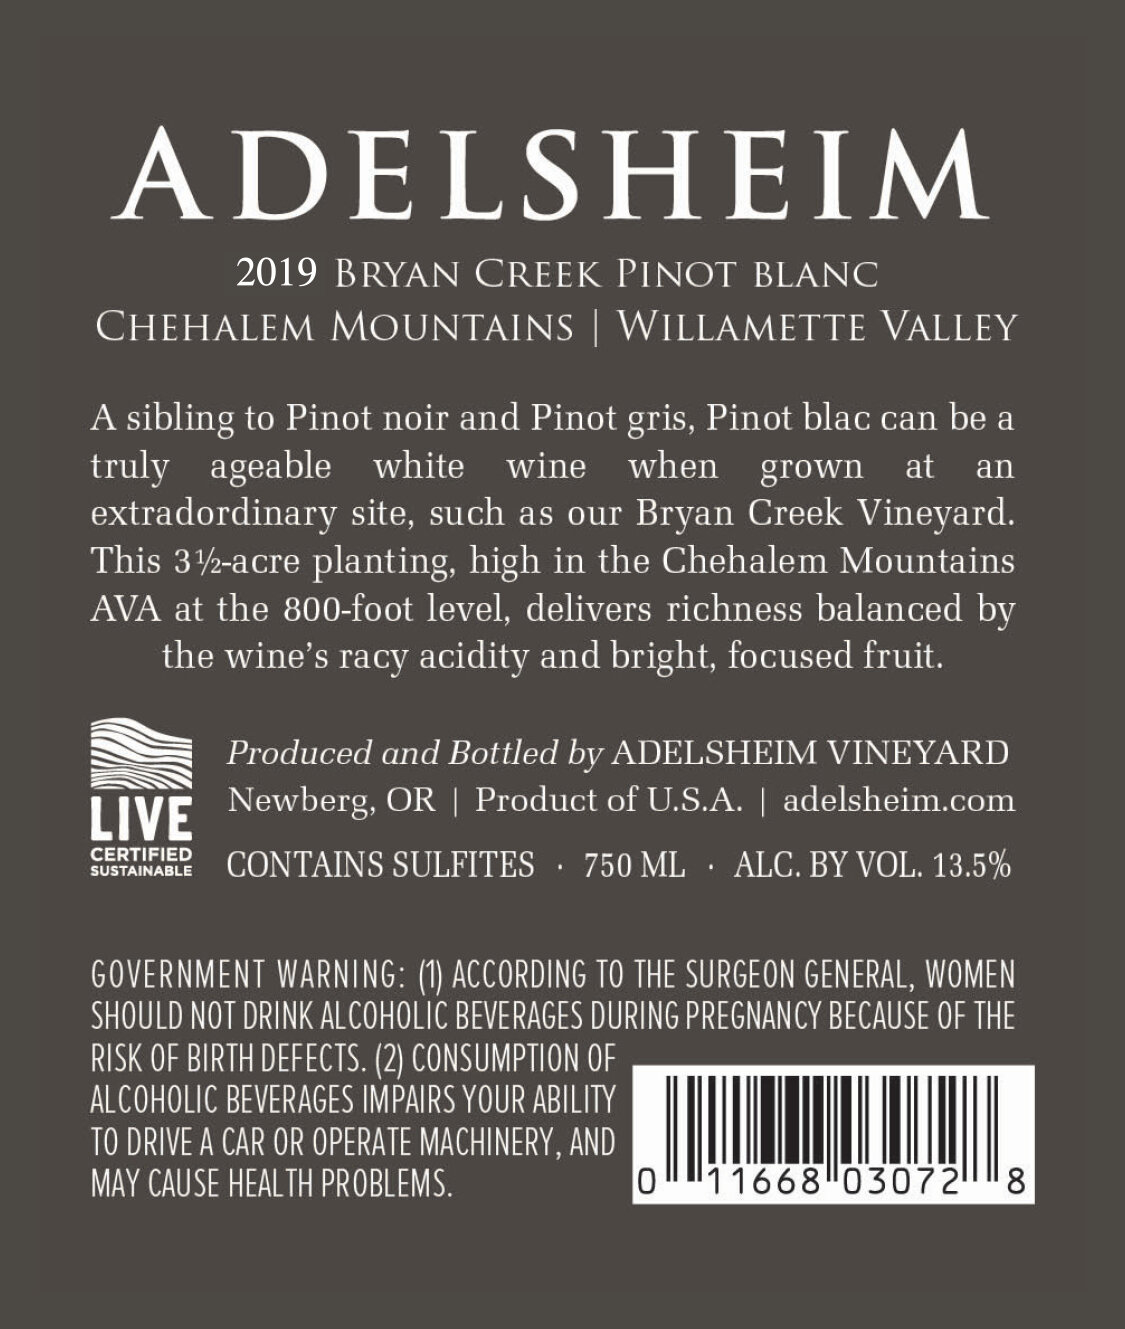 Adelsheim 2019 Bryan Creek Pinot blanc back label